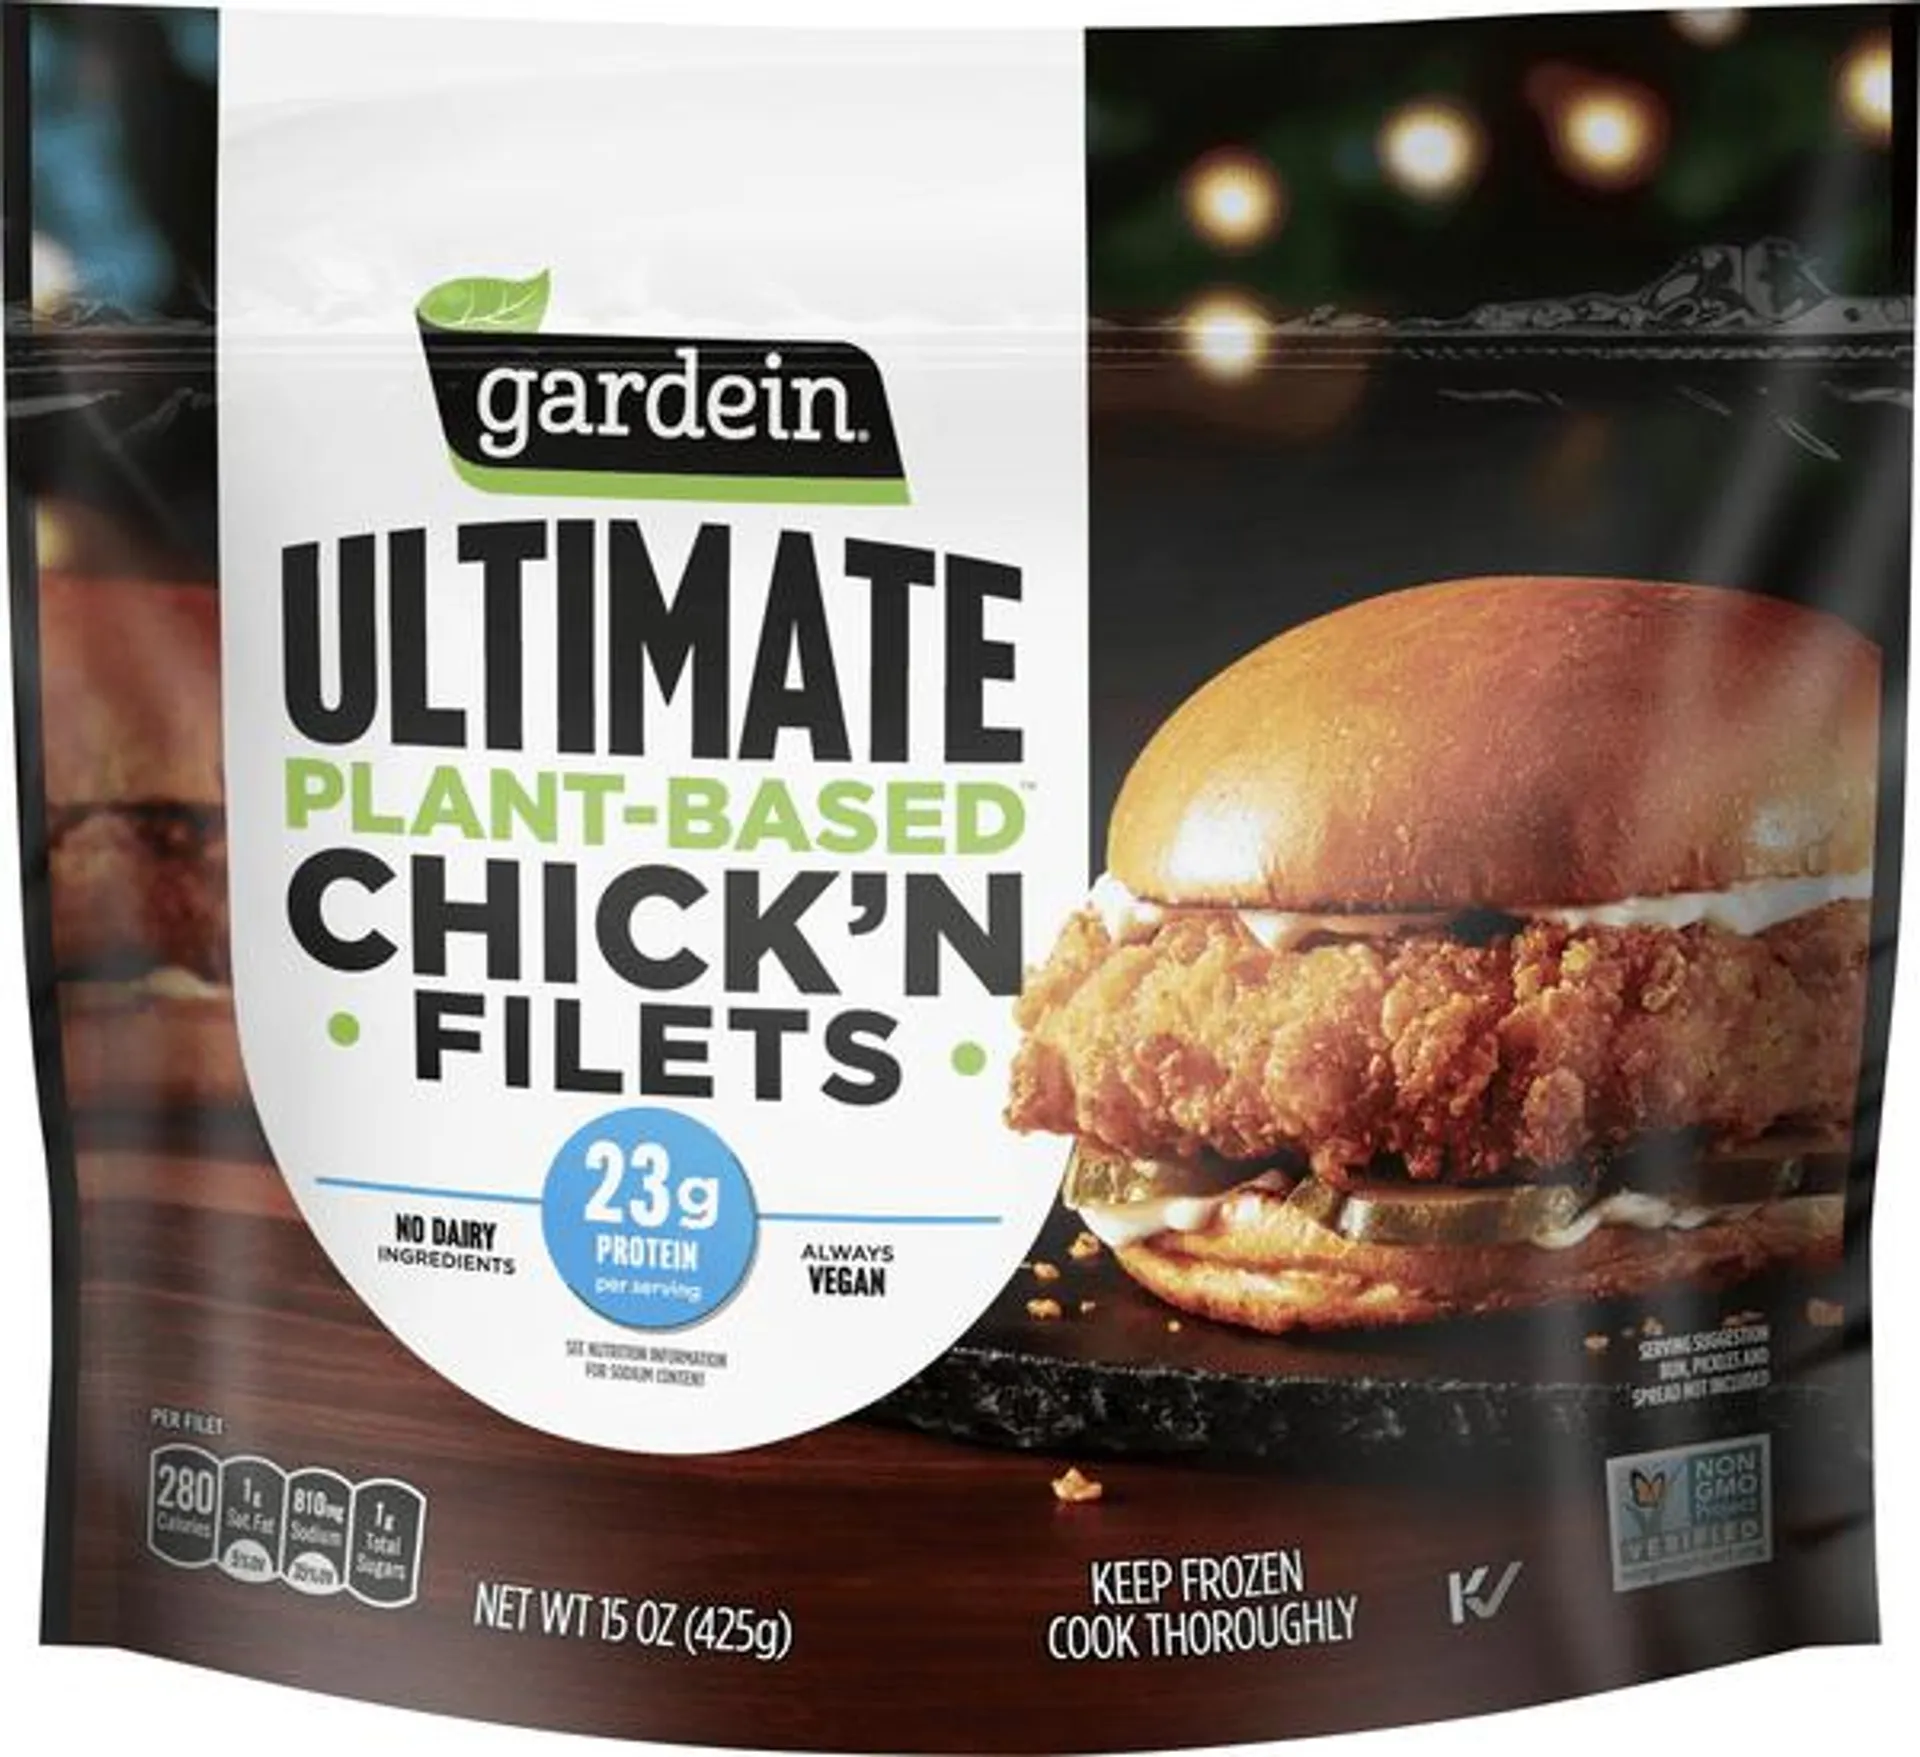 Gardein Ultimate Plant-Based Chick'N Filets